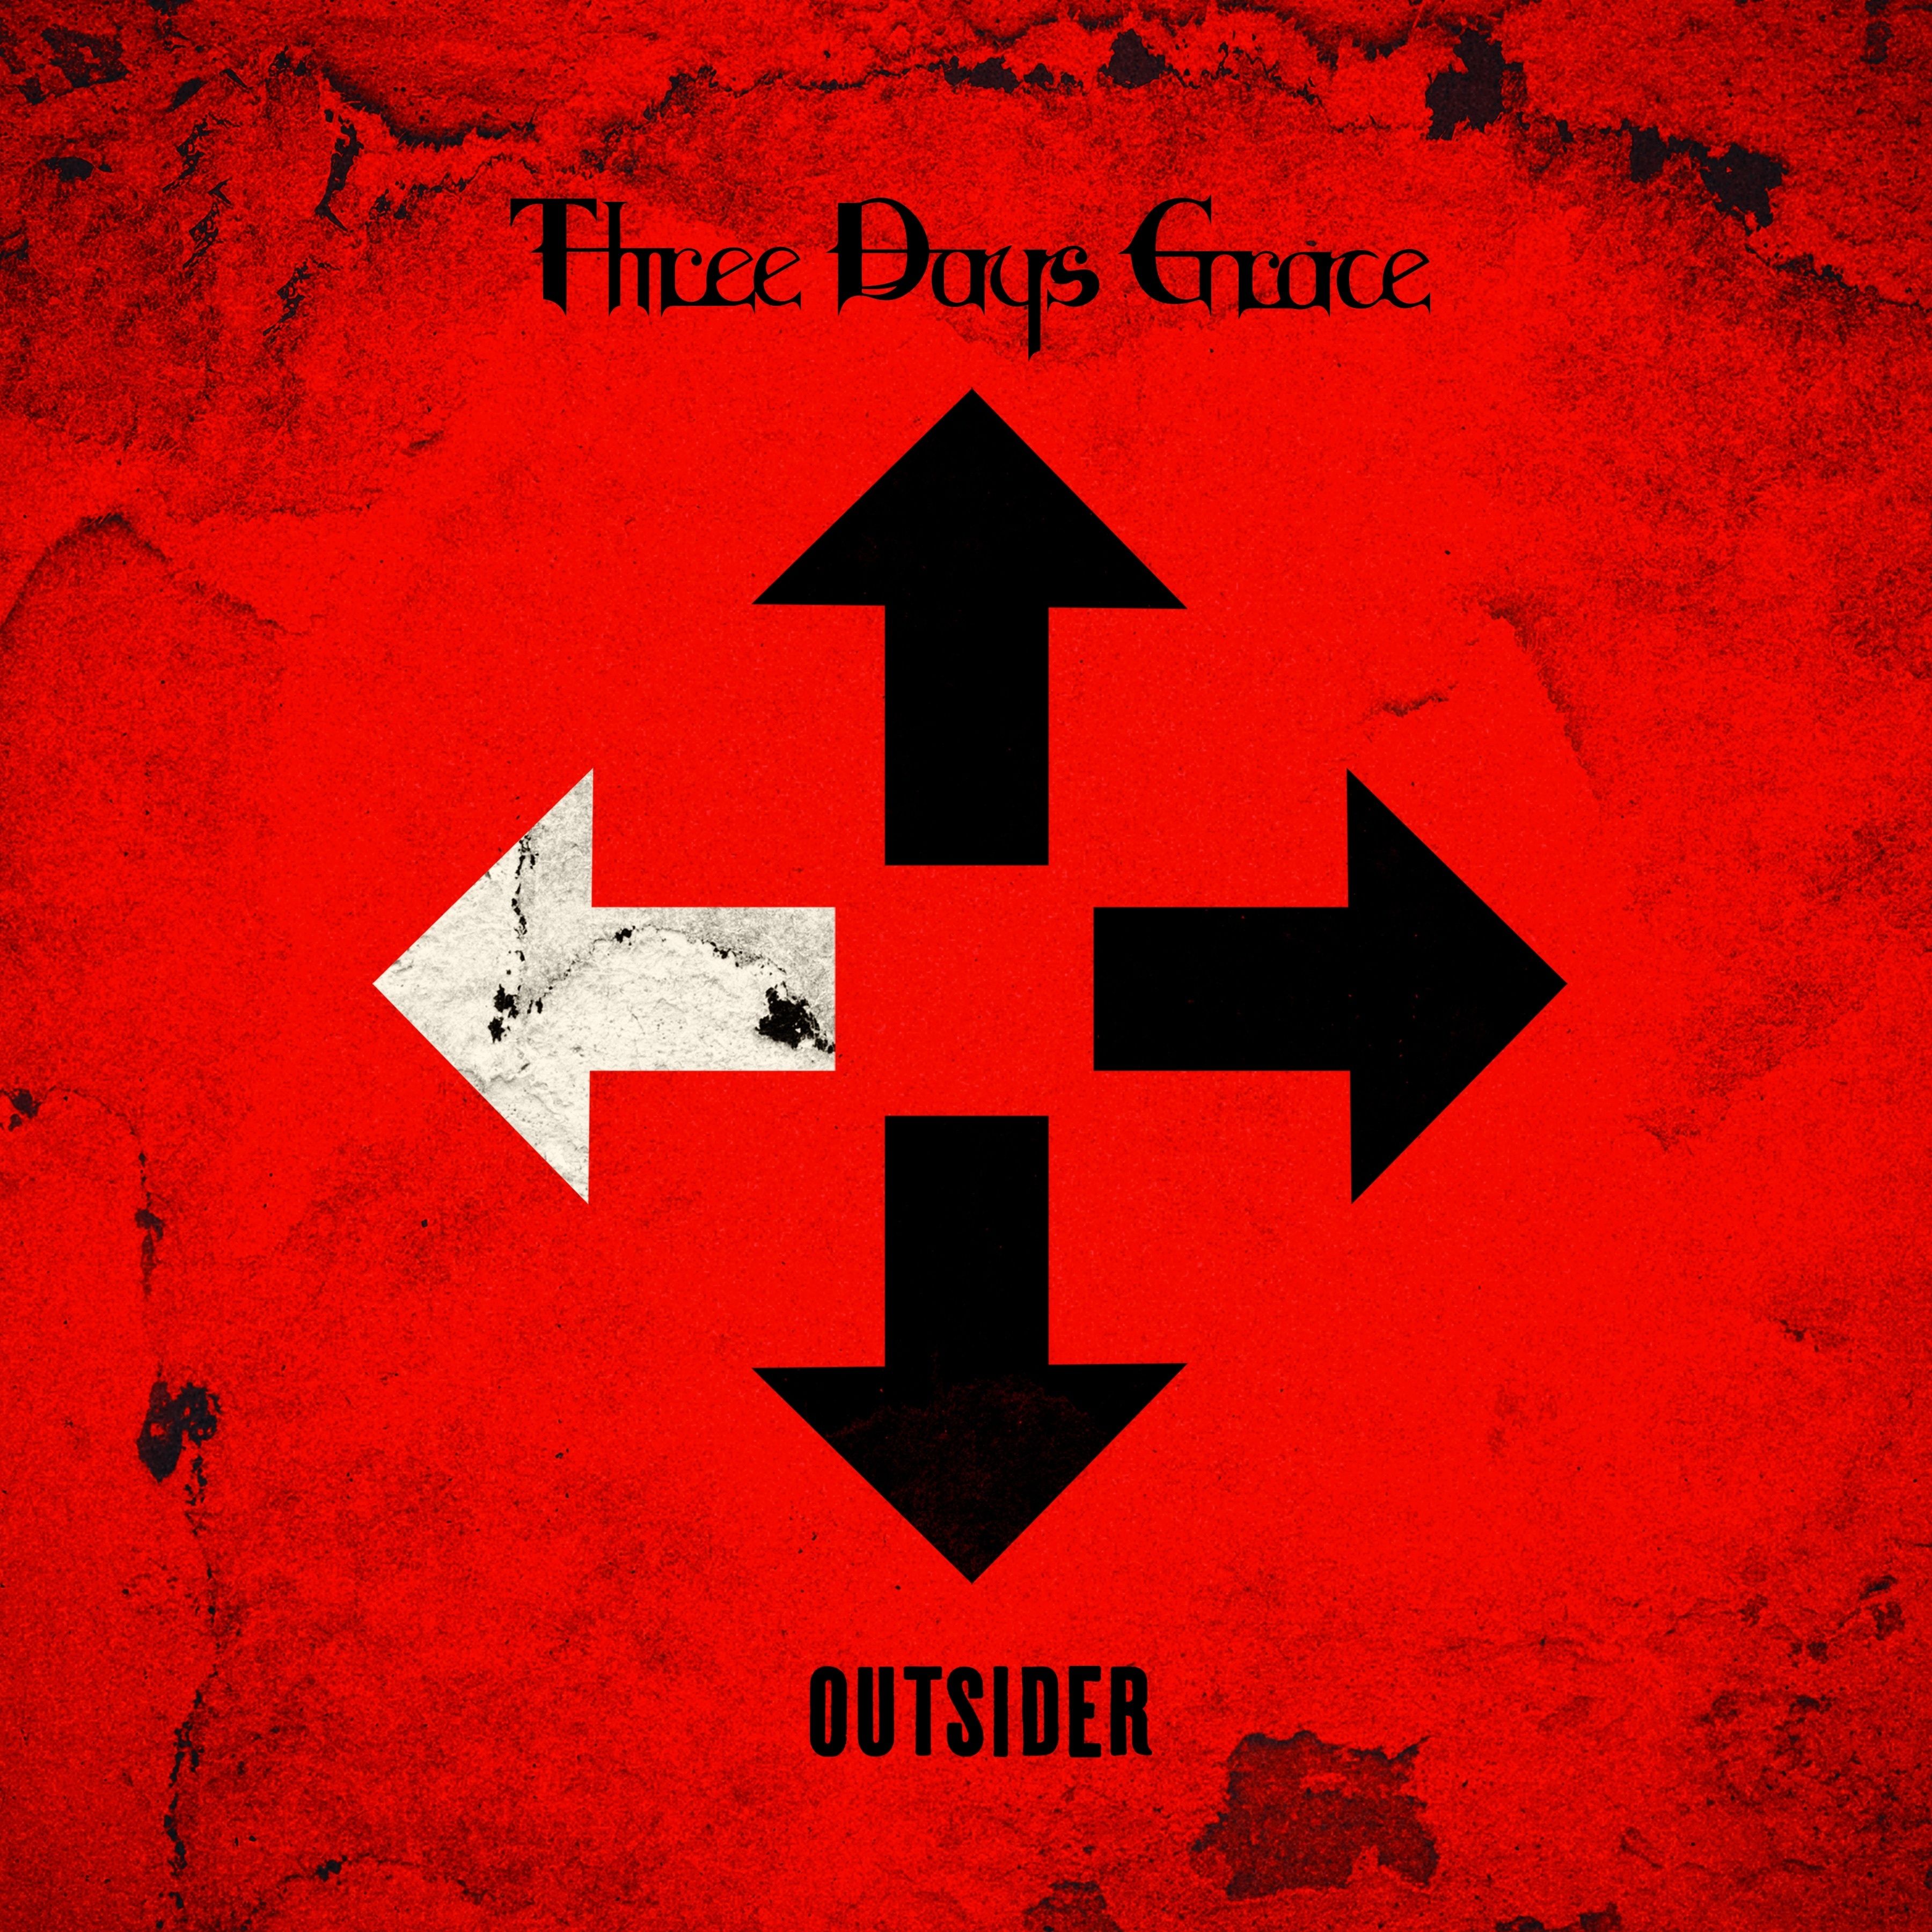 Outsider | Discografia de Three Days Grace - LETRAS.MUS.BR